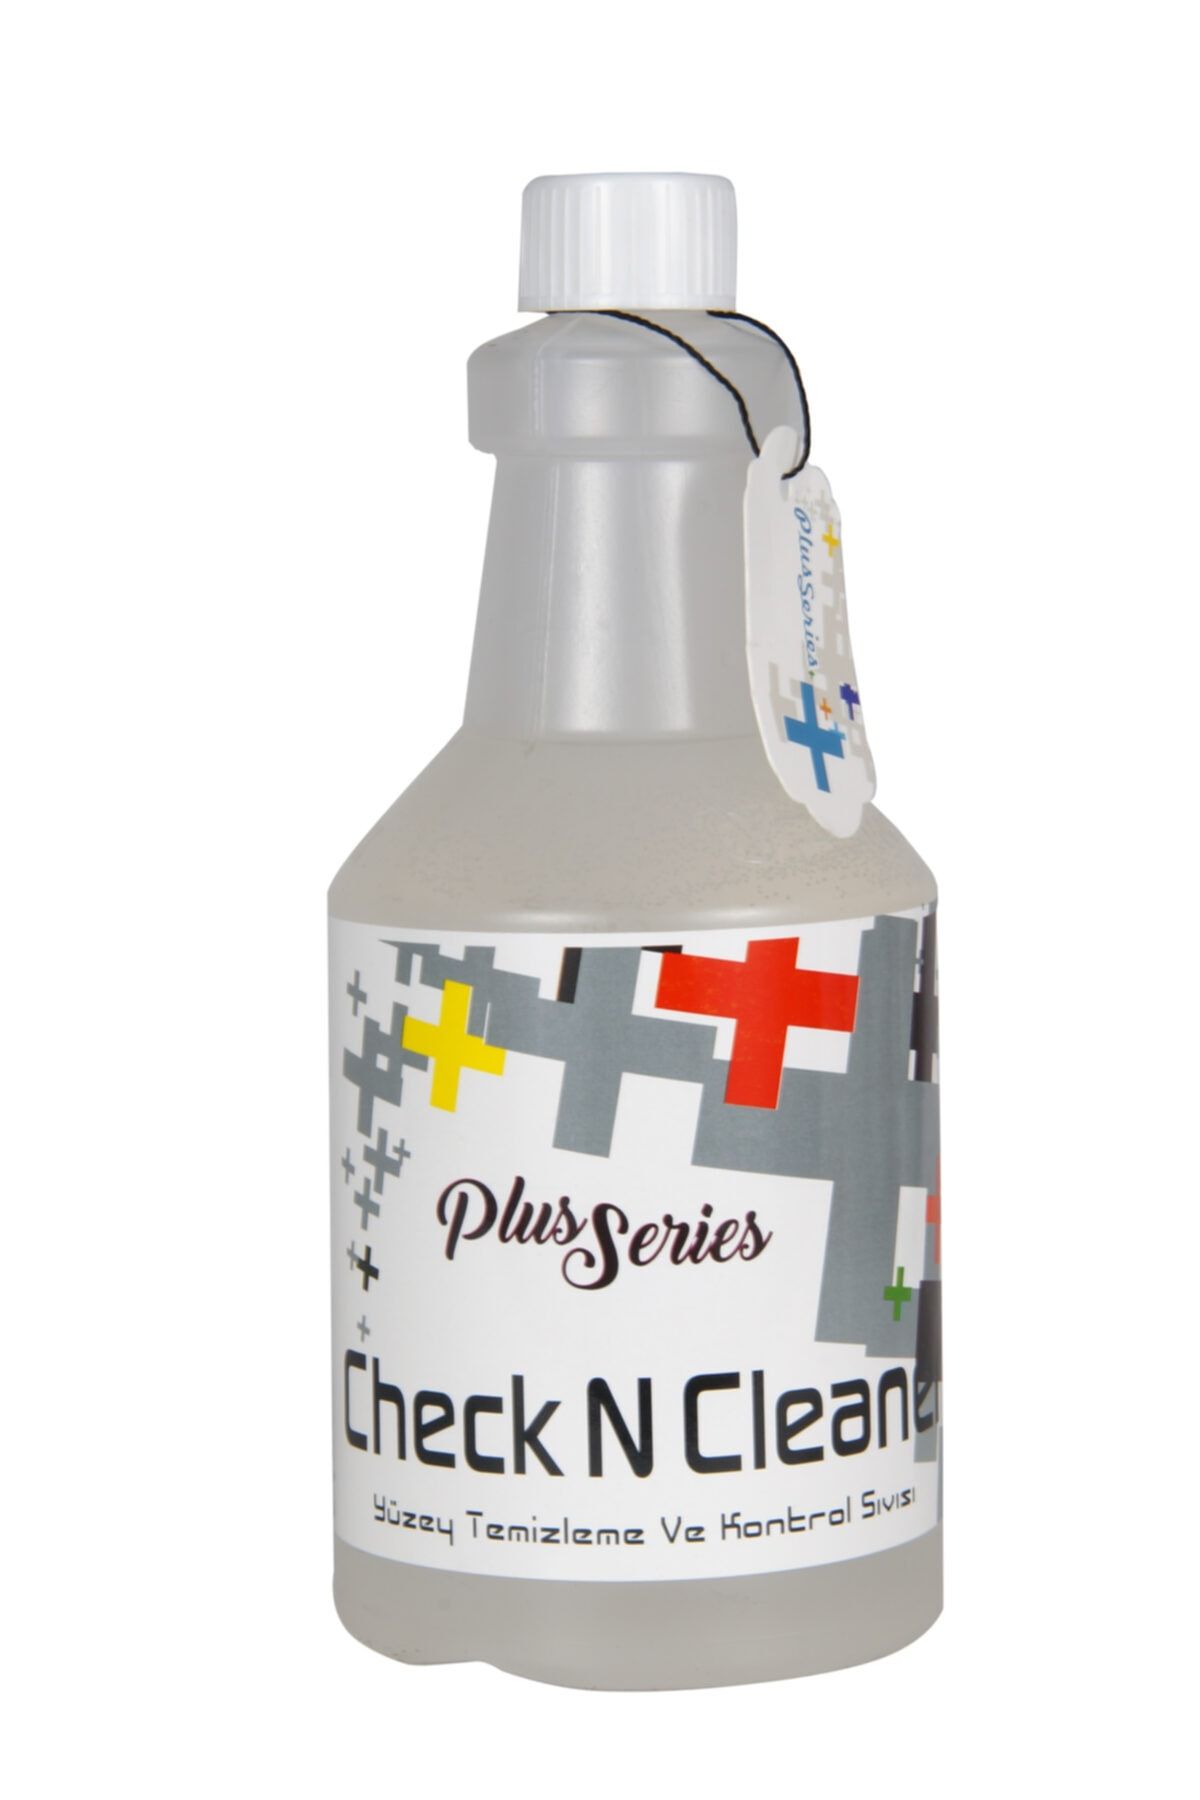 Fiawax Plus Series Check N Cleaner Yüzey Temizleme ve Kontrol Sıvısı 1 Lt